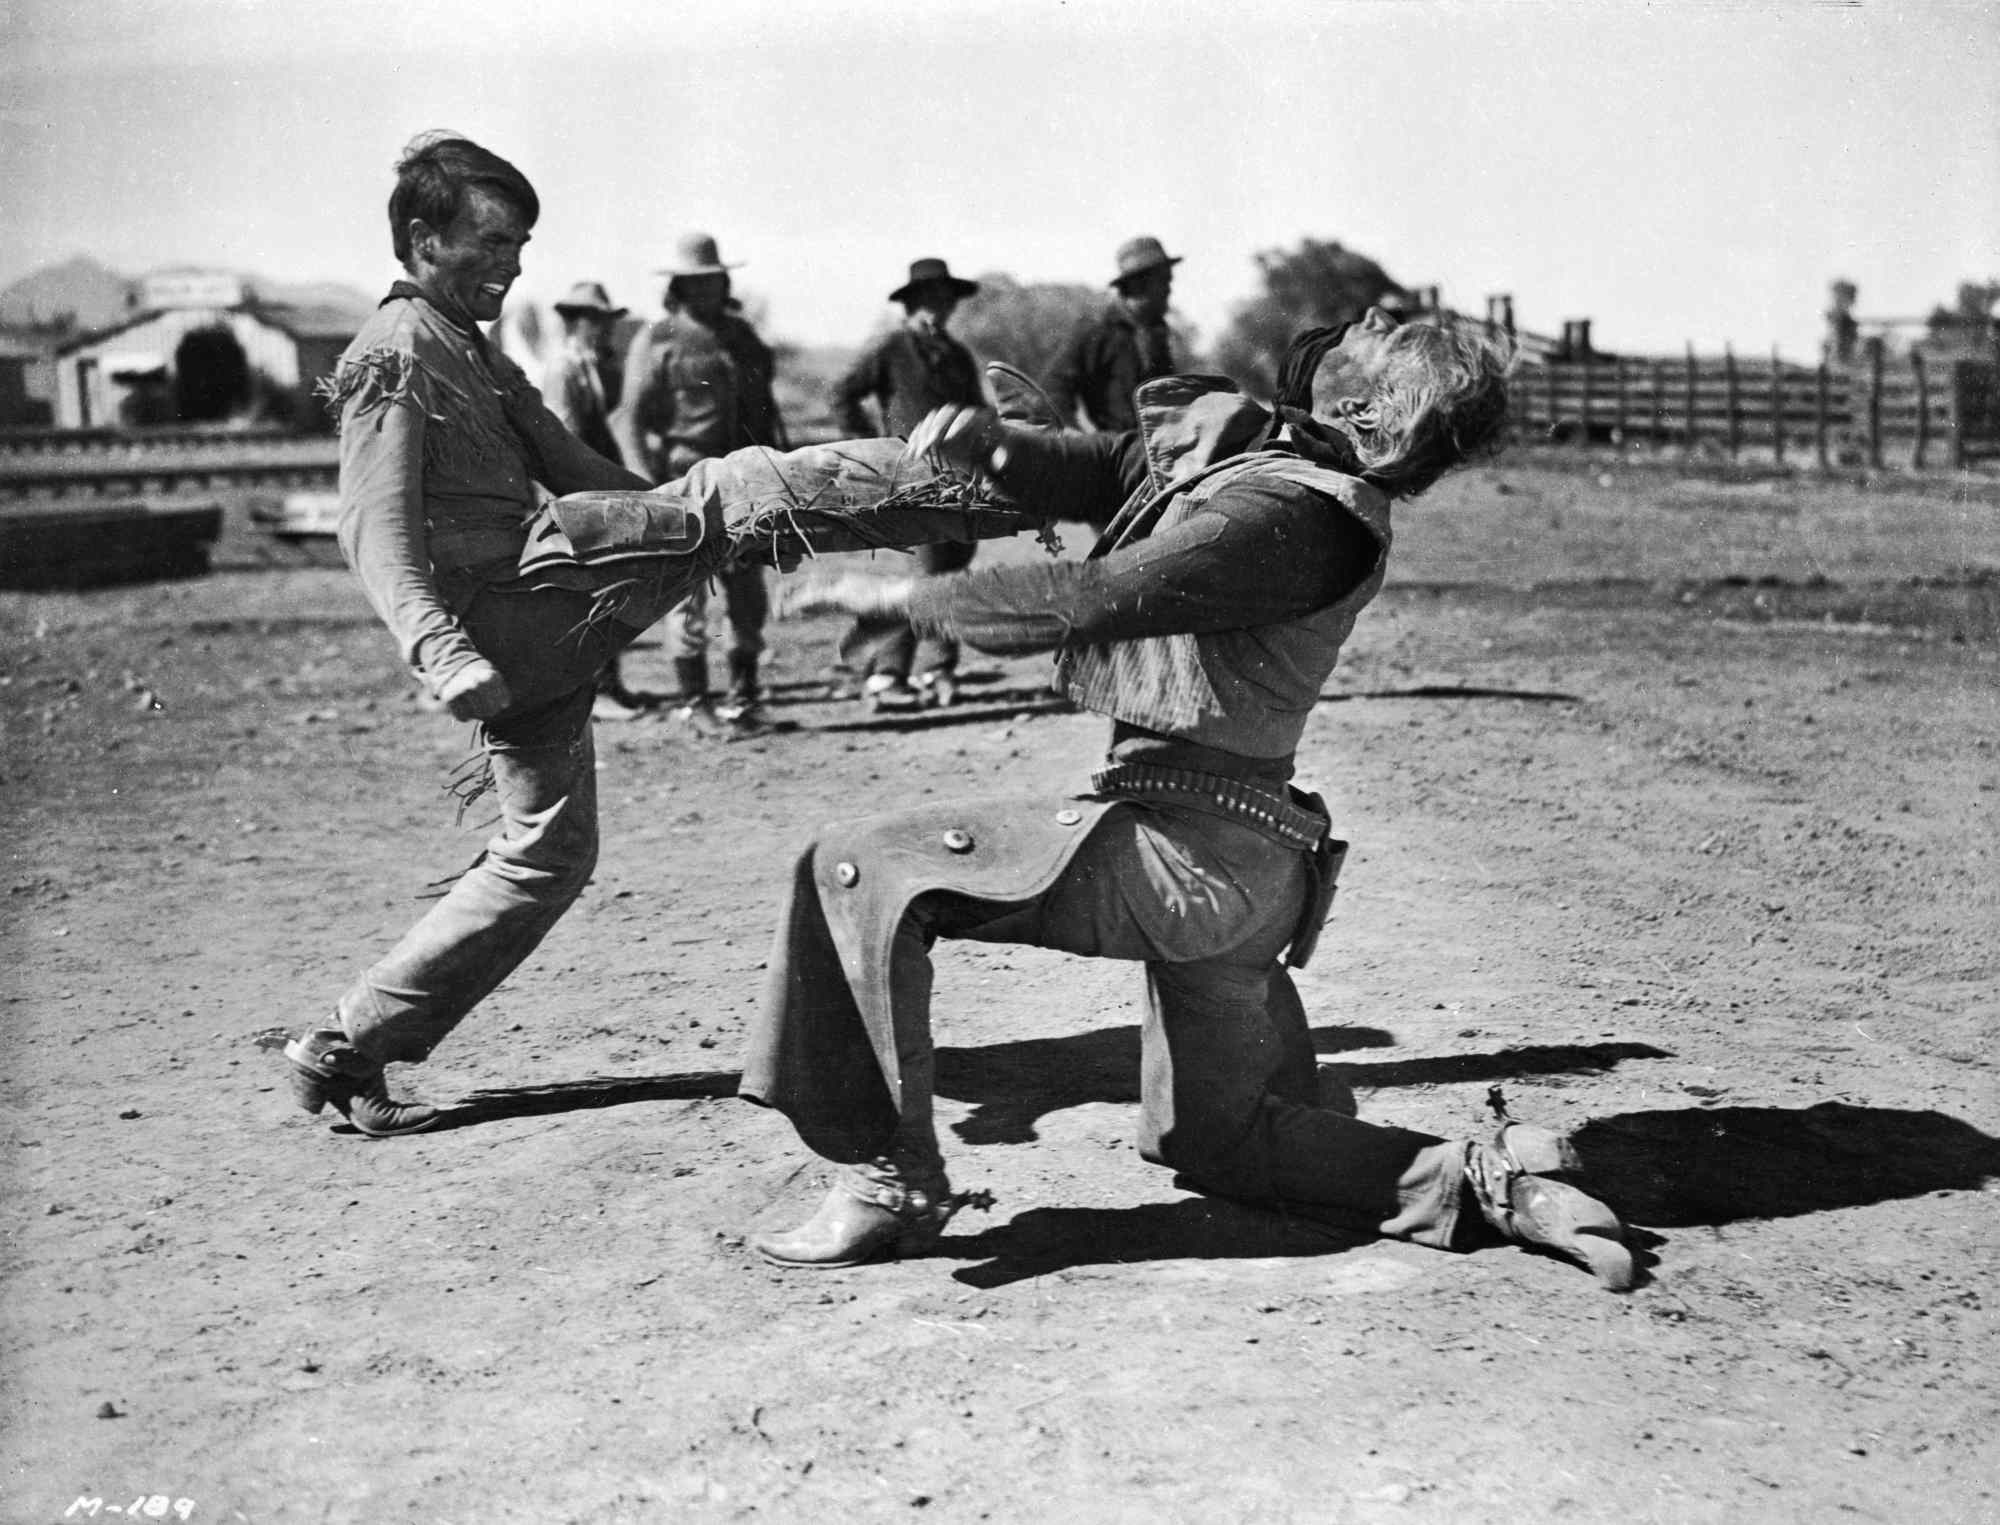 'Red River' Montgomery Clift as Matt Garth and John Wayne as Thomas Dunson. Matt kicks Thomas in the face, whose head is moving back.